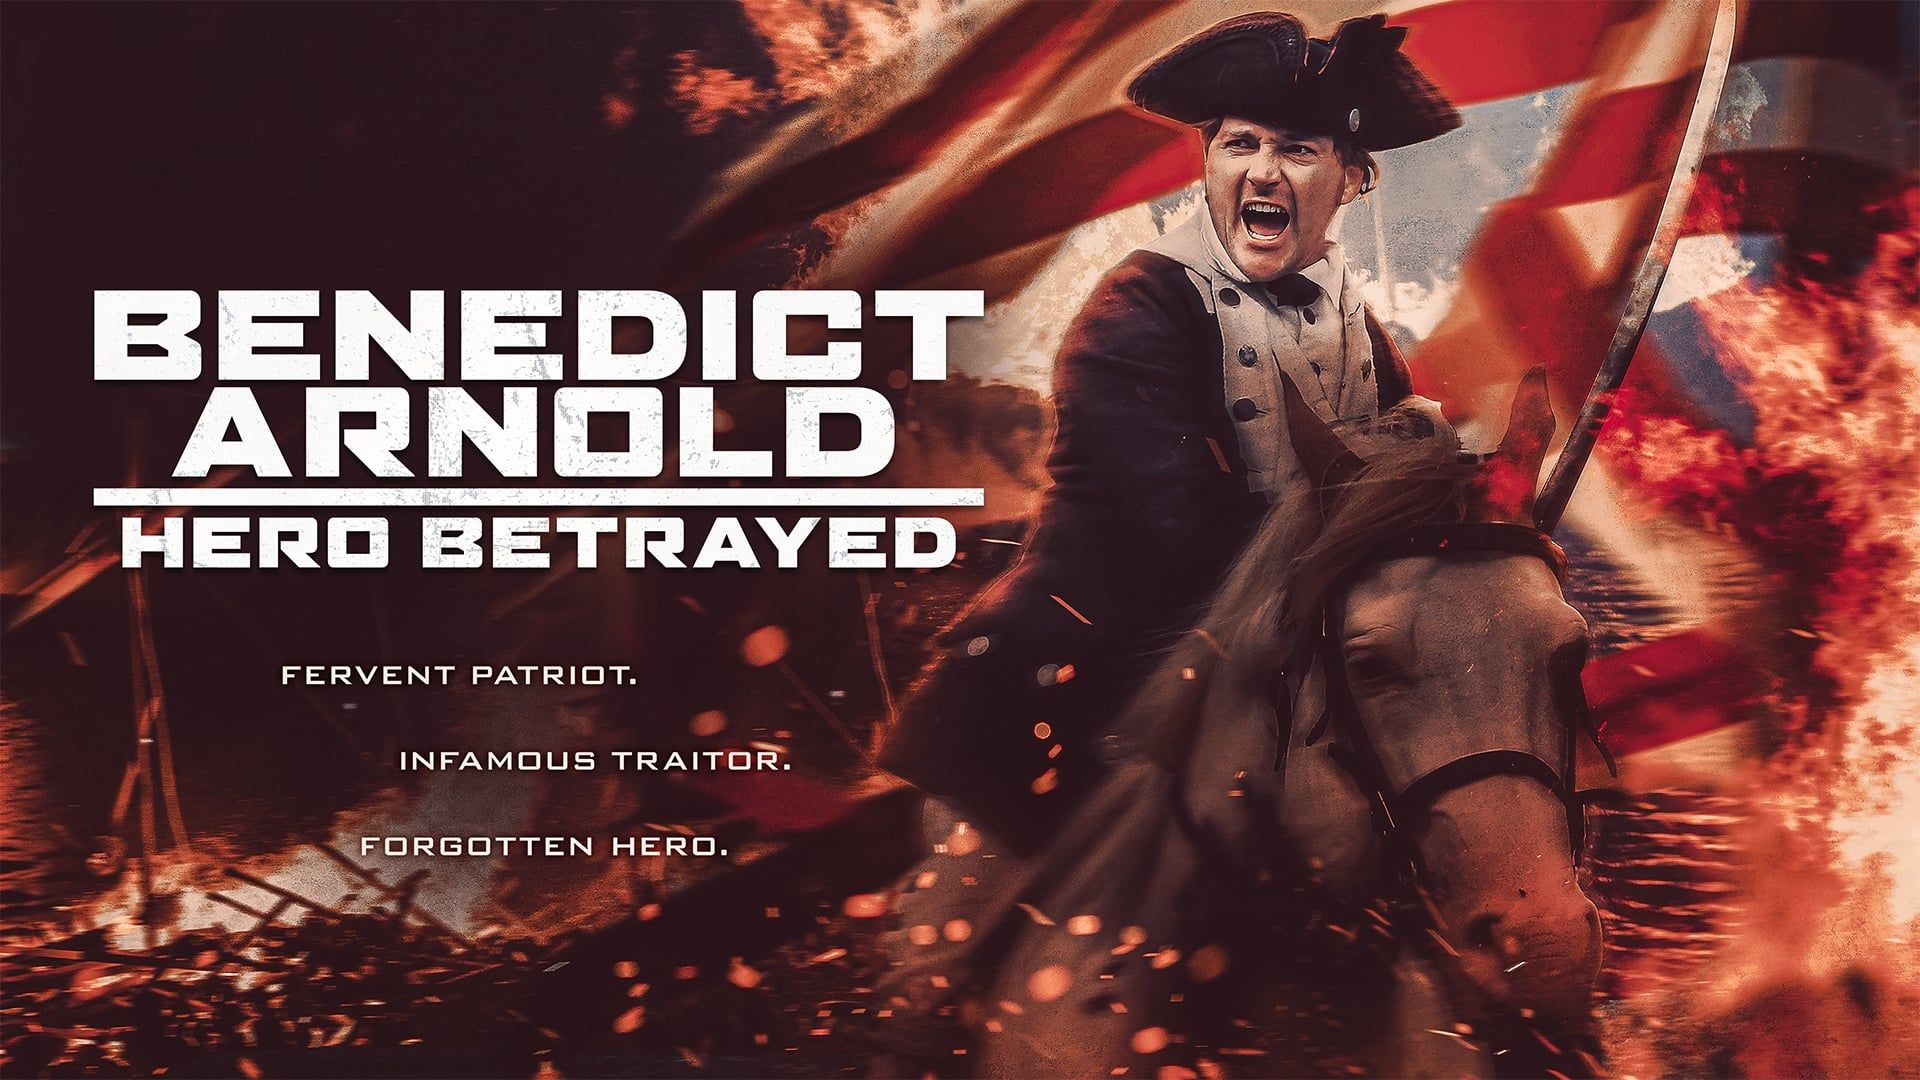 Benedict Arnold: Hero Betrayed background